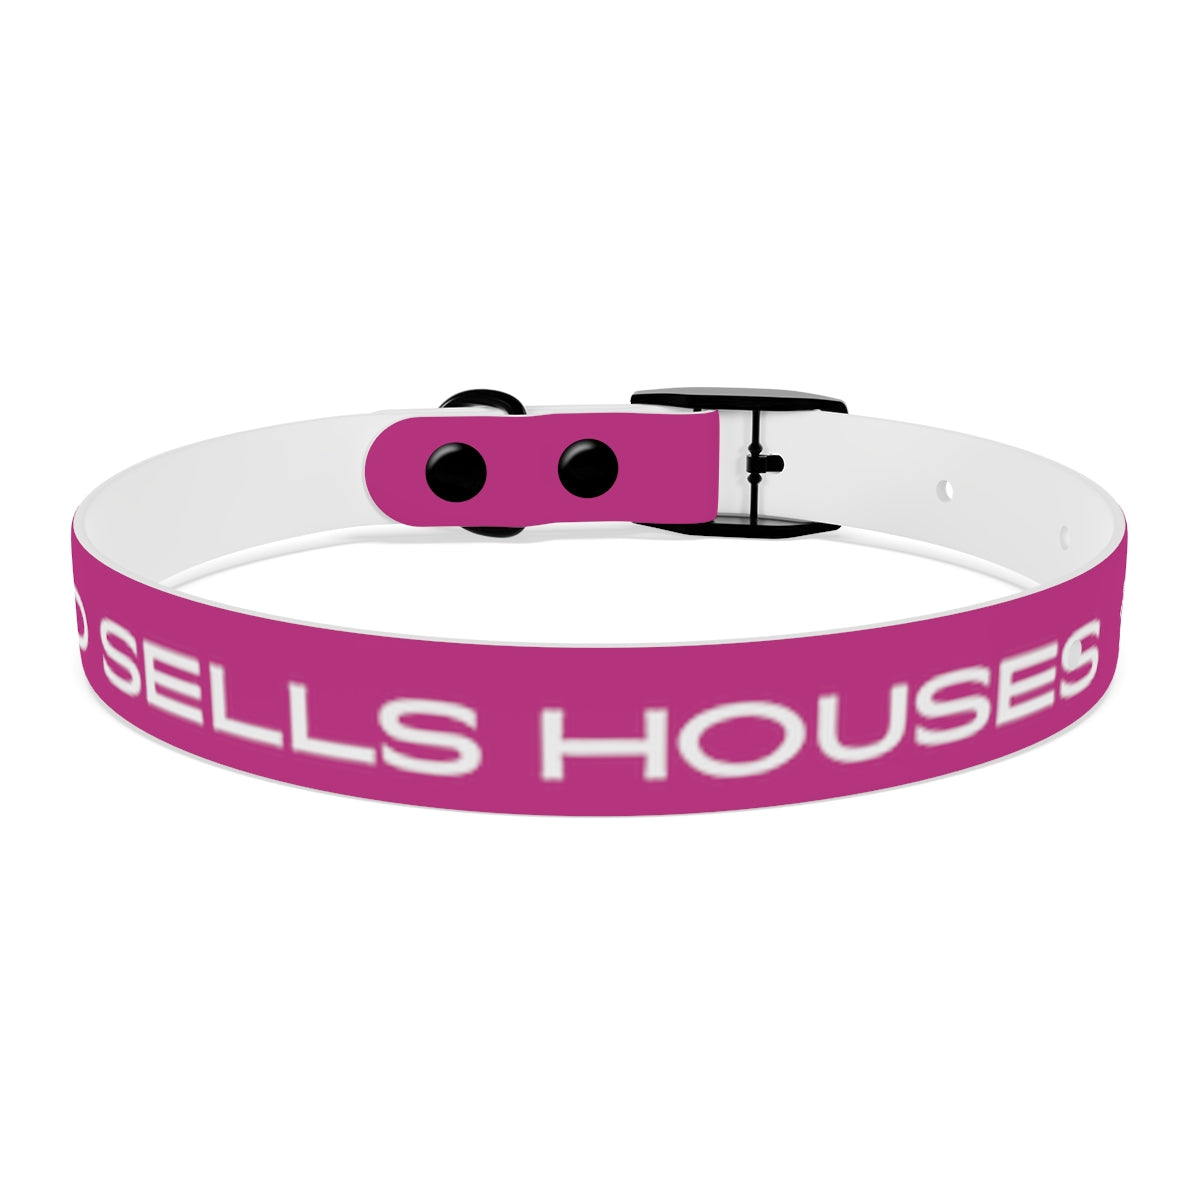 Dog Collar - My Dad Sells Houses - Pink